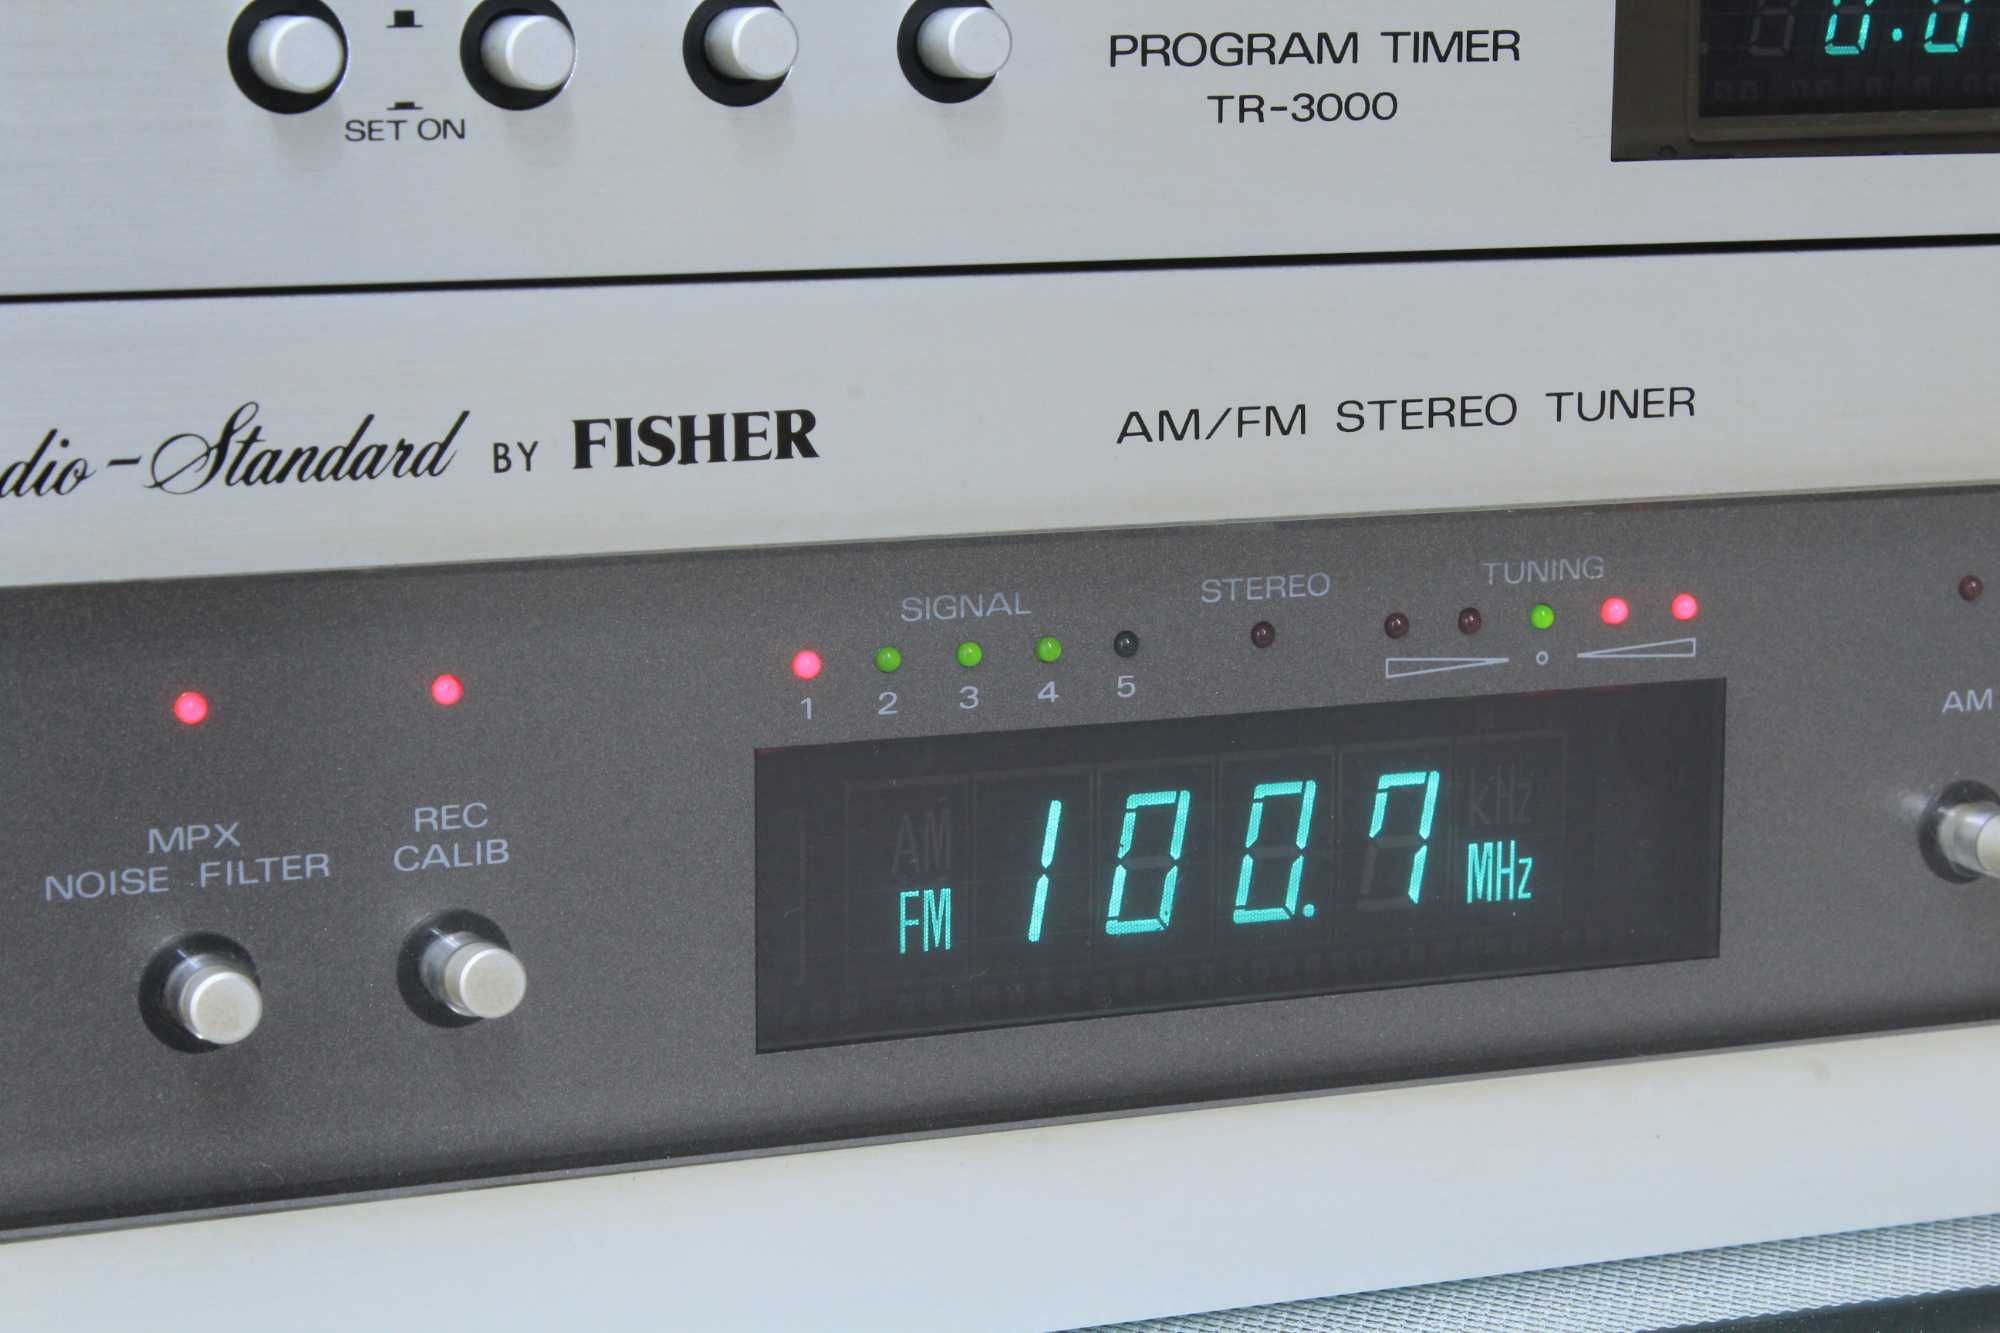 Tuner+timer Fisher Studio Standard.